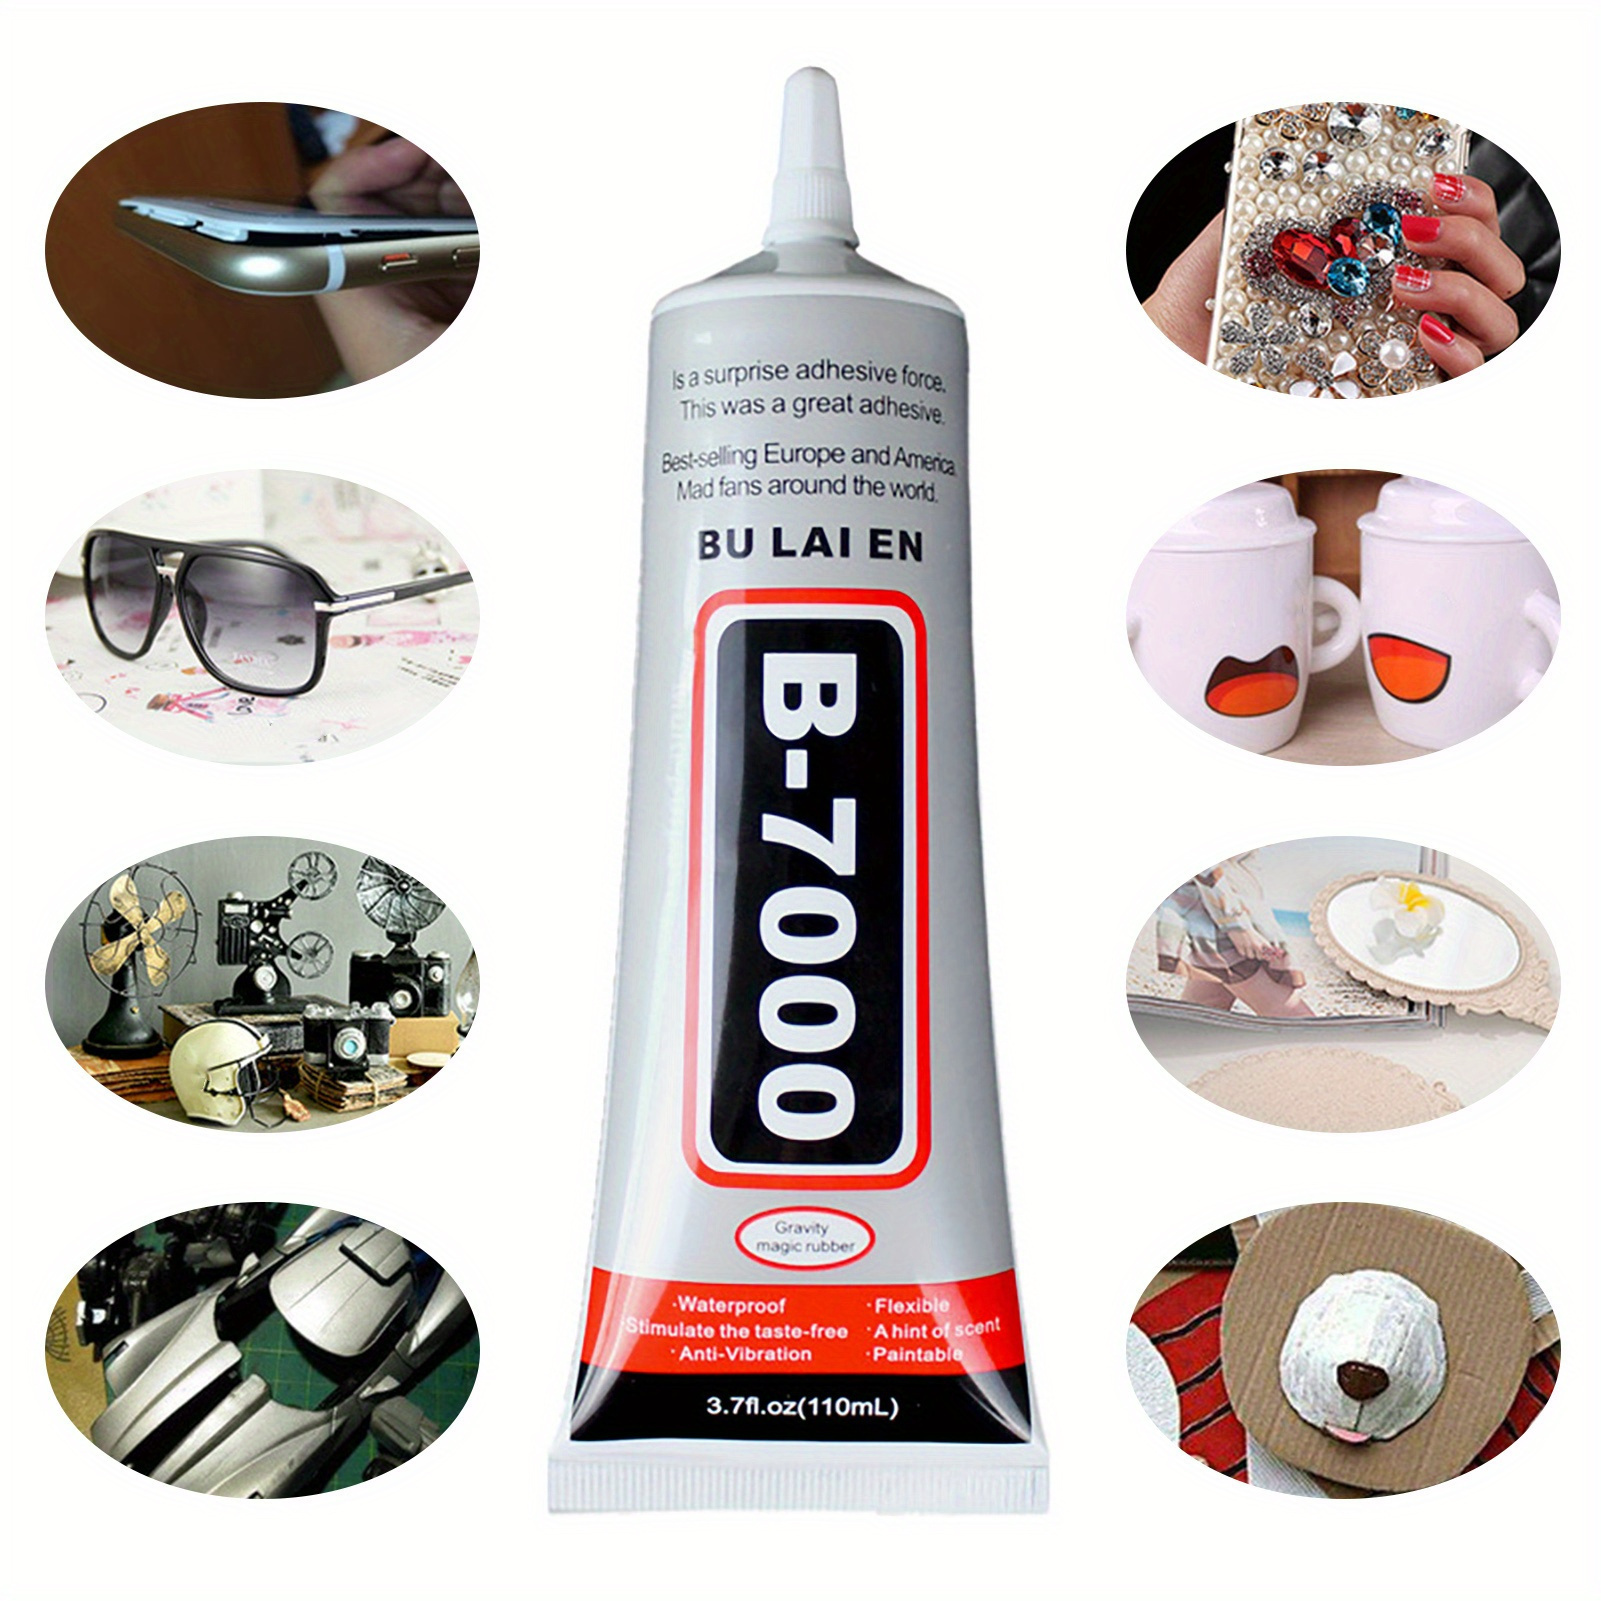 B-7000 Glue Adhesive, 0.1 fl. oz.